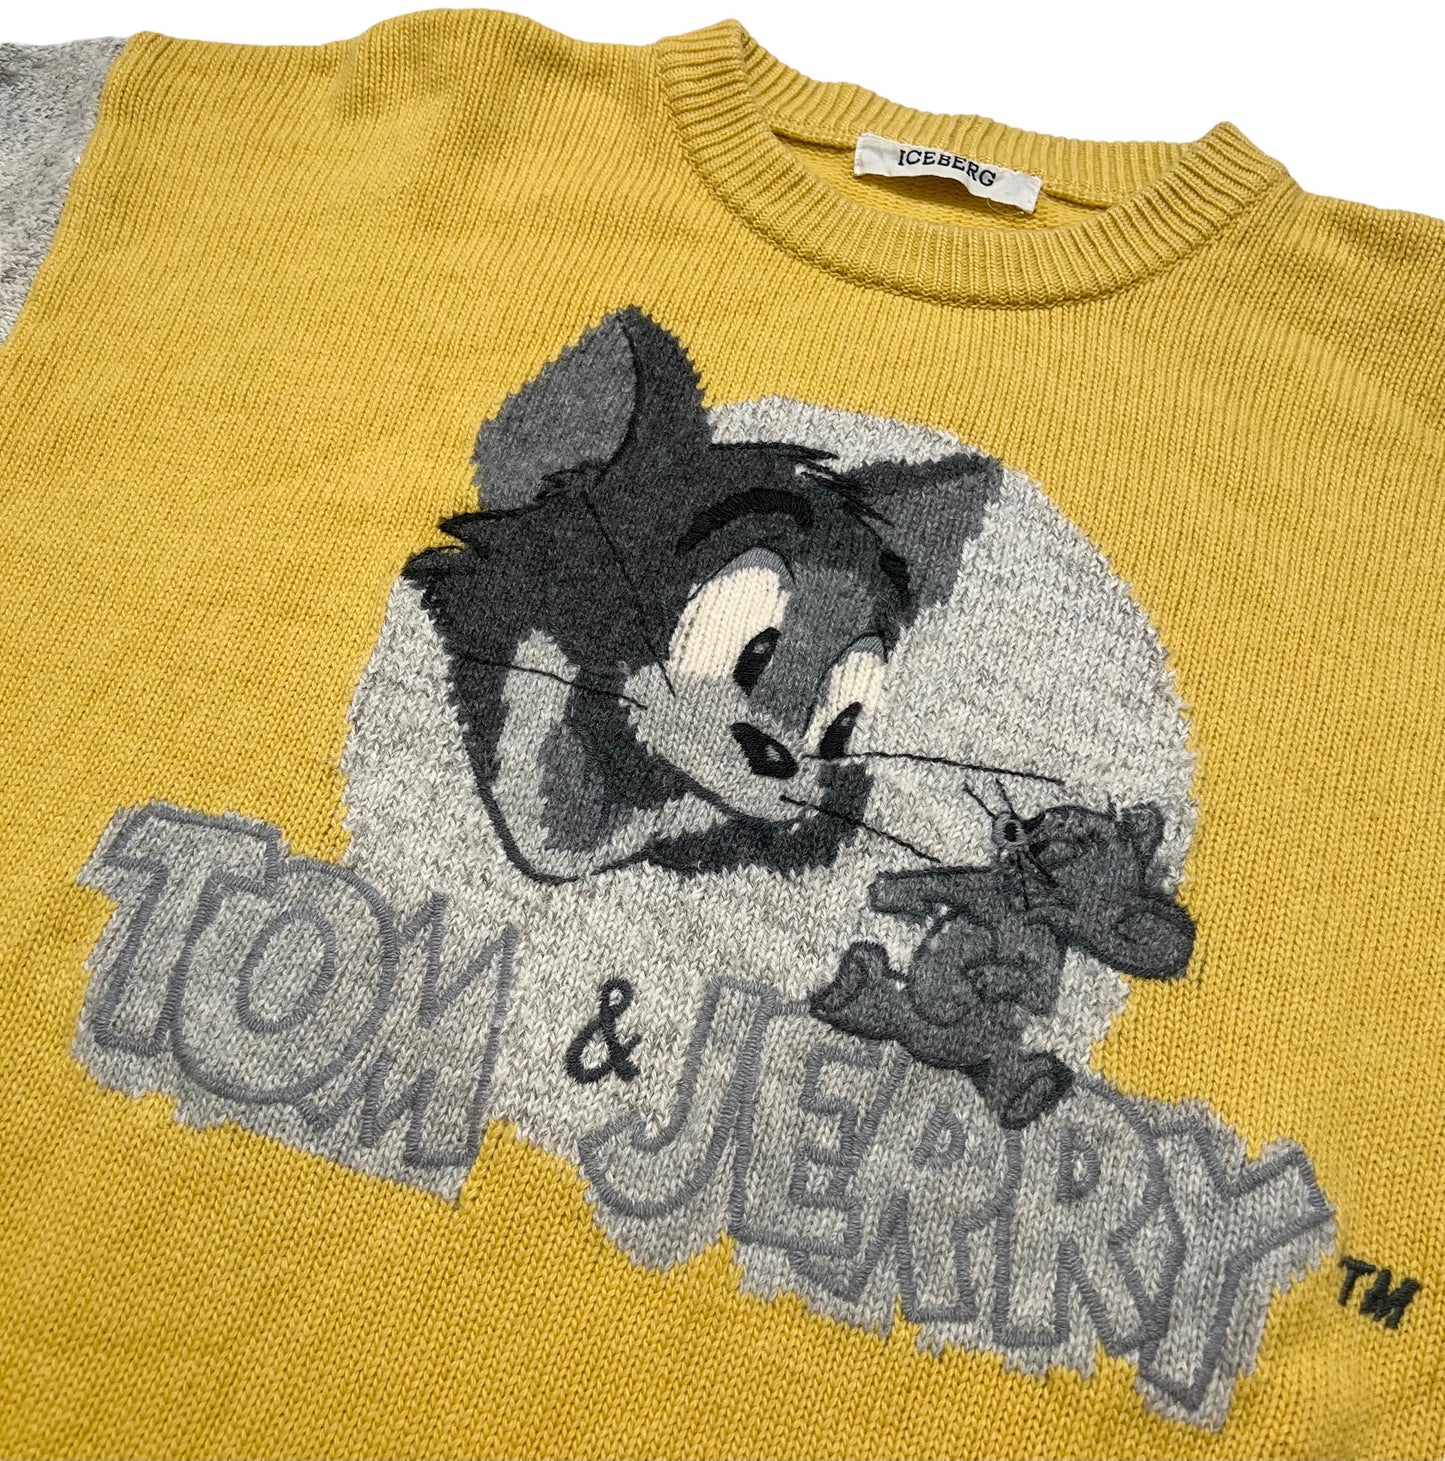 1995 Iceberg "Tom & Jerry" crewneck sweater